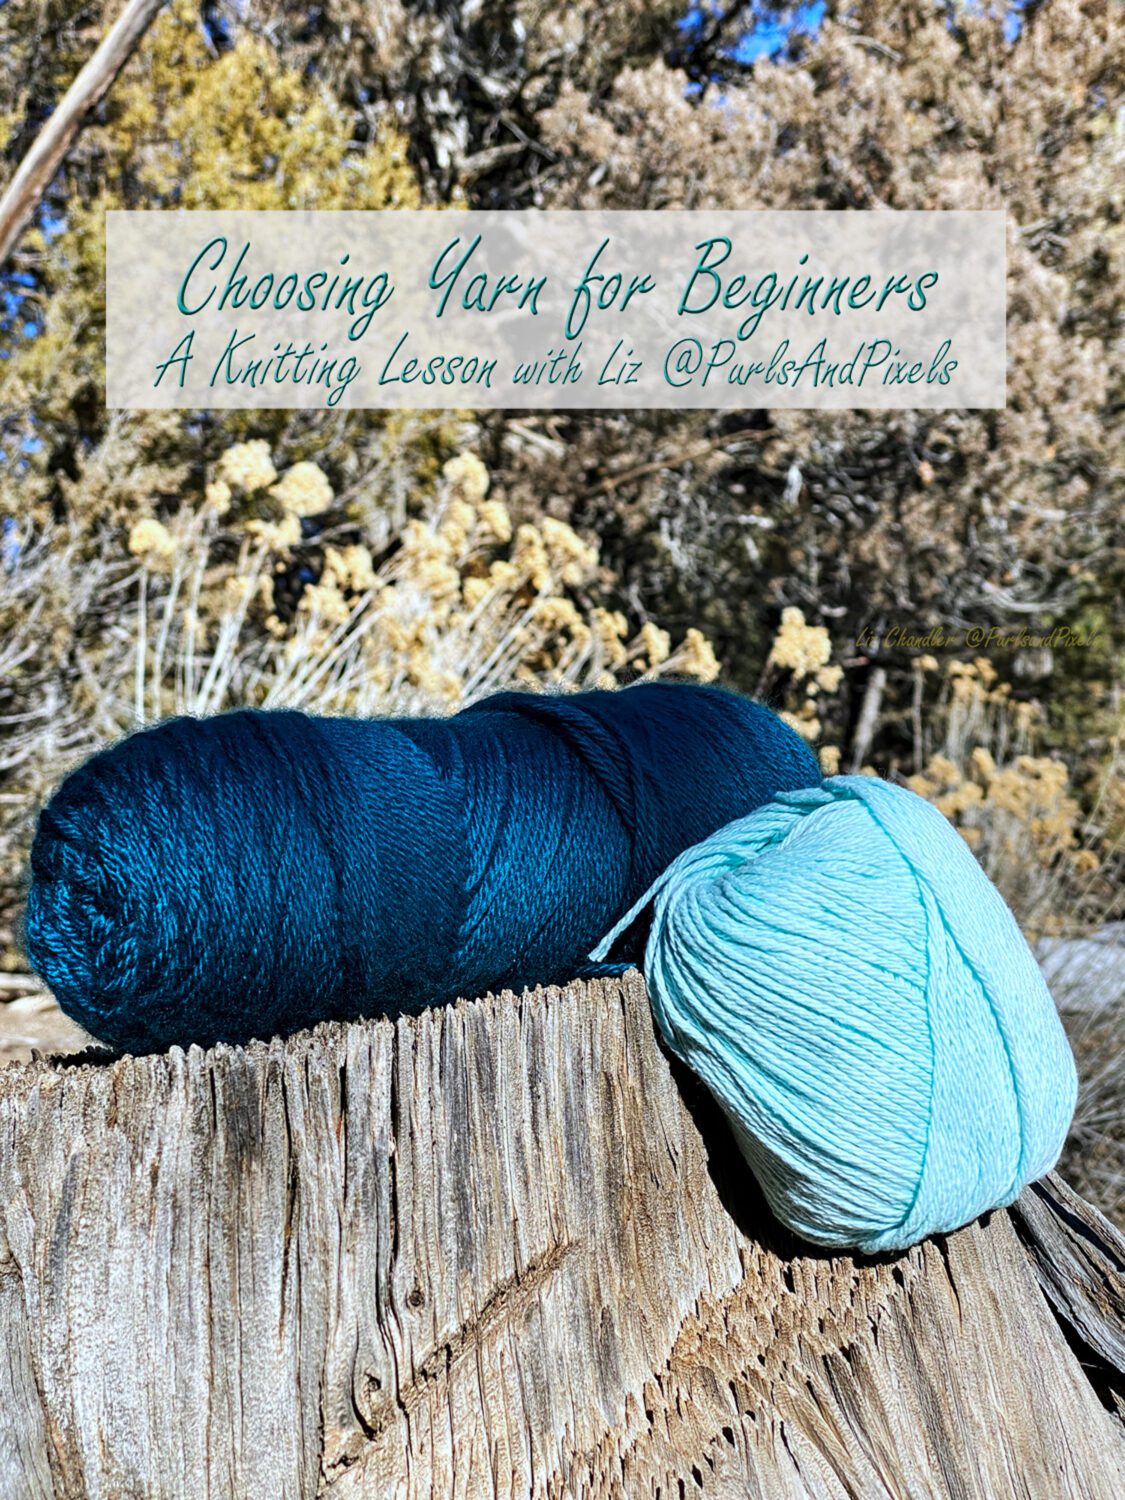 Choosing Yarn for Knitting